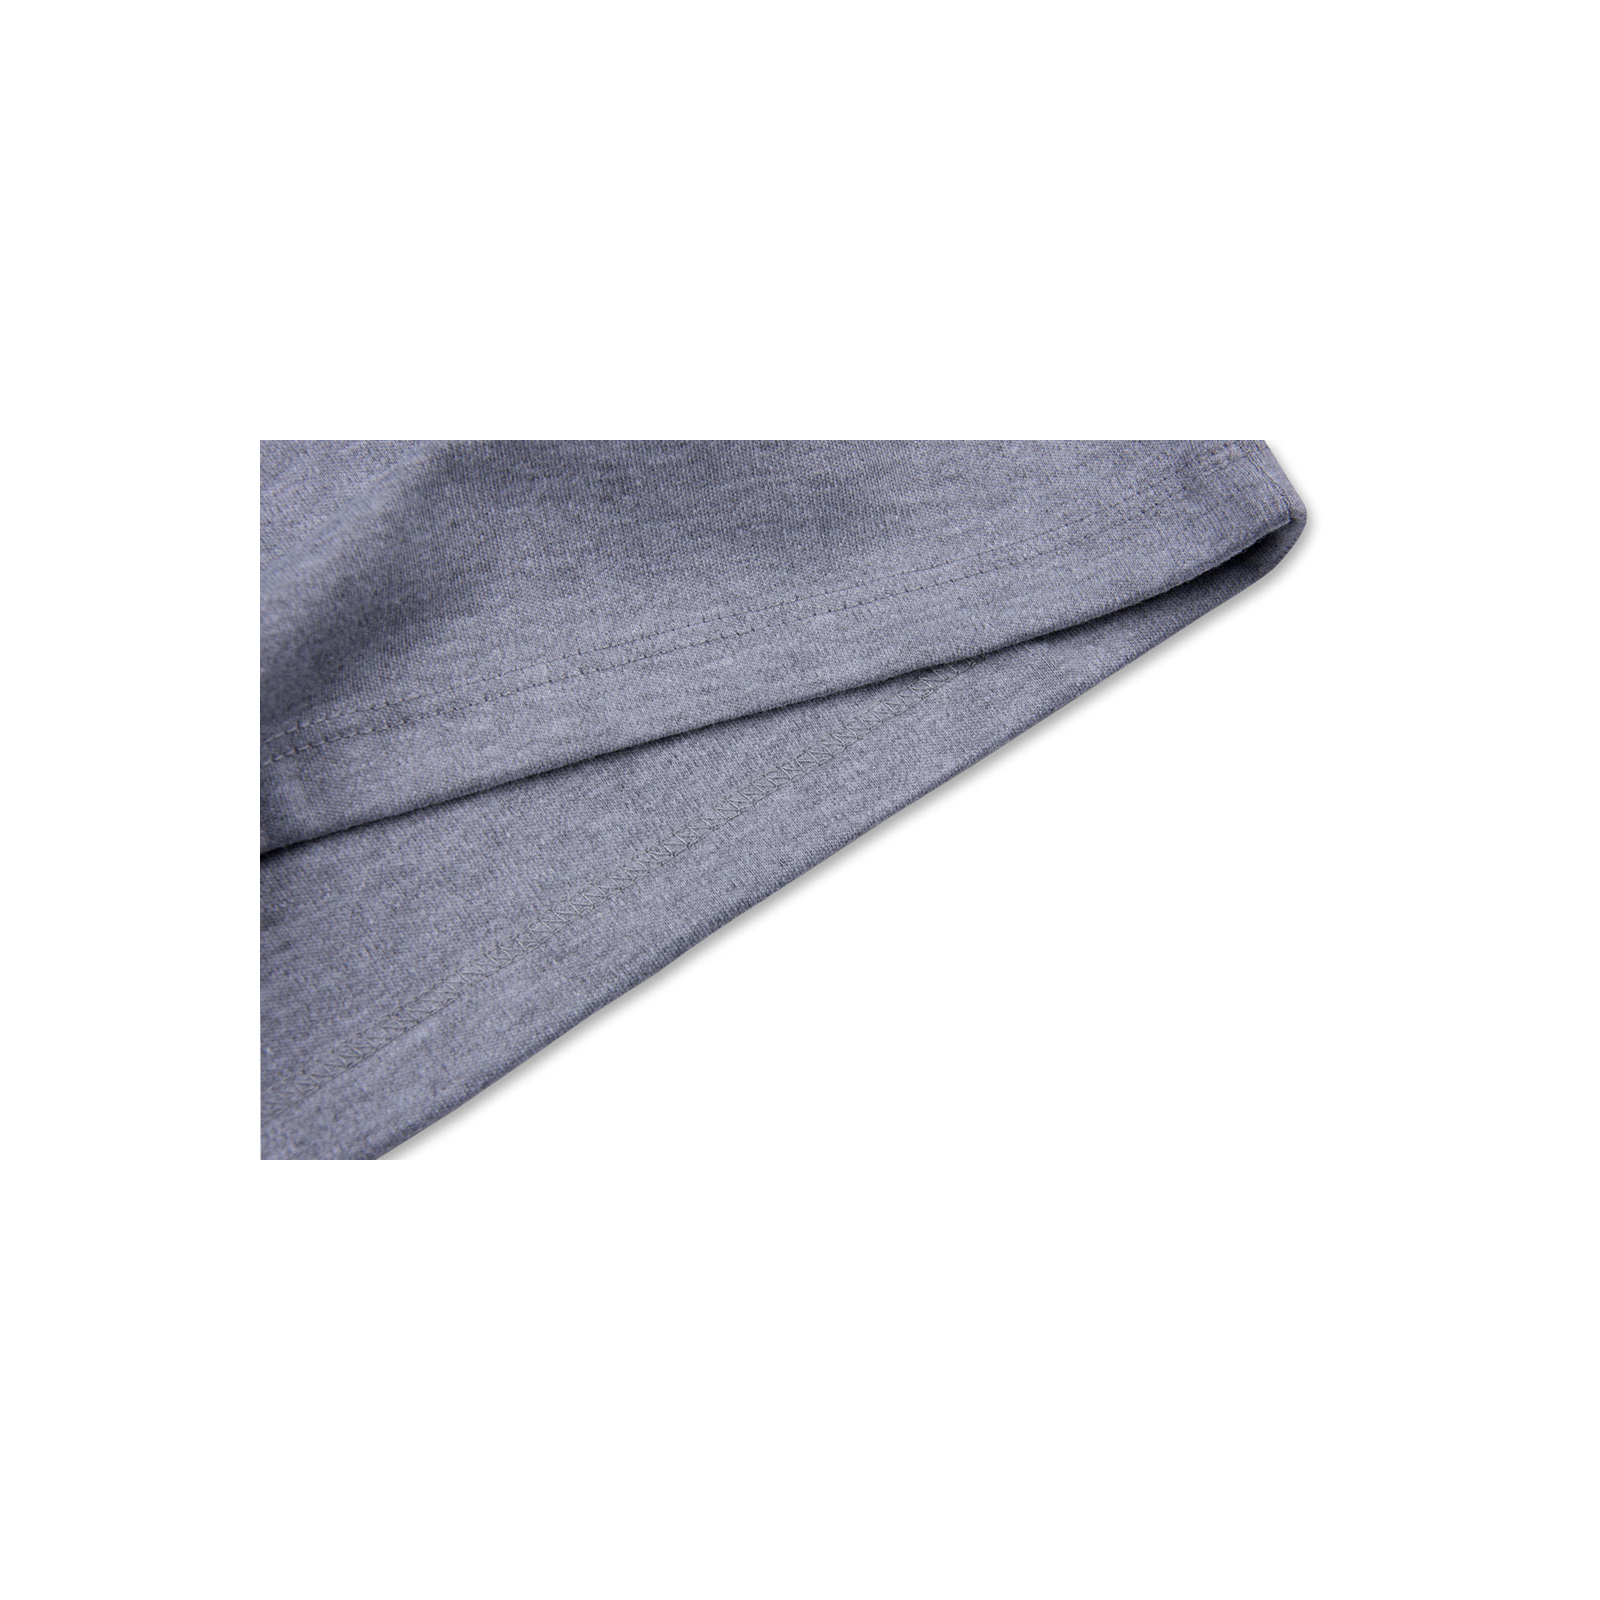 Кофта Lovetti водолазка серая меланжевая (1012-128-gray) изображение 5